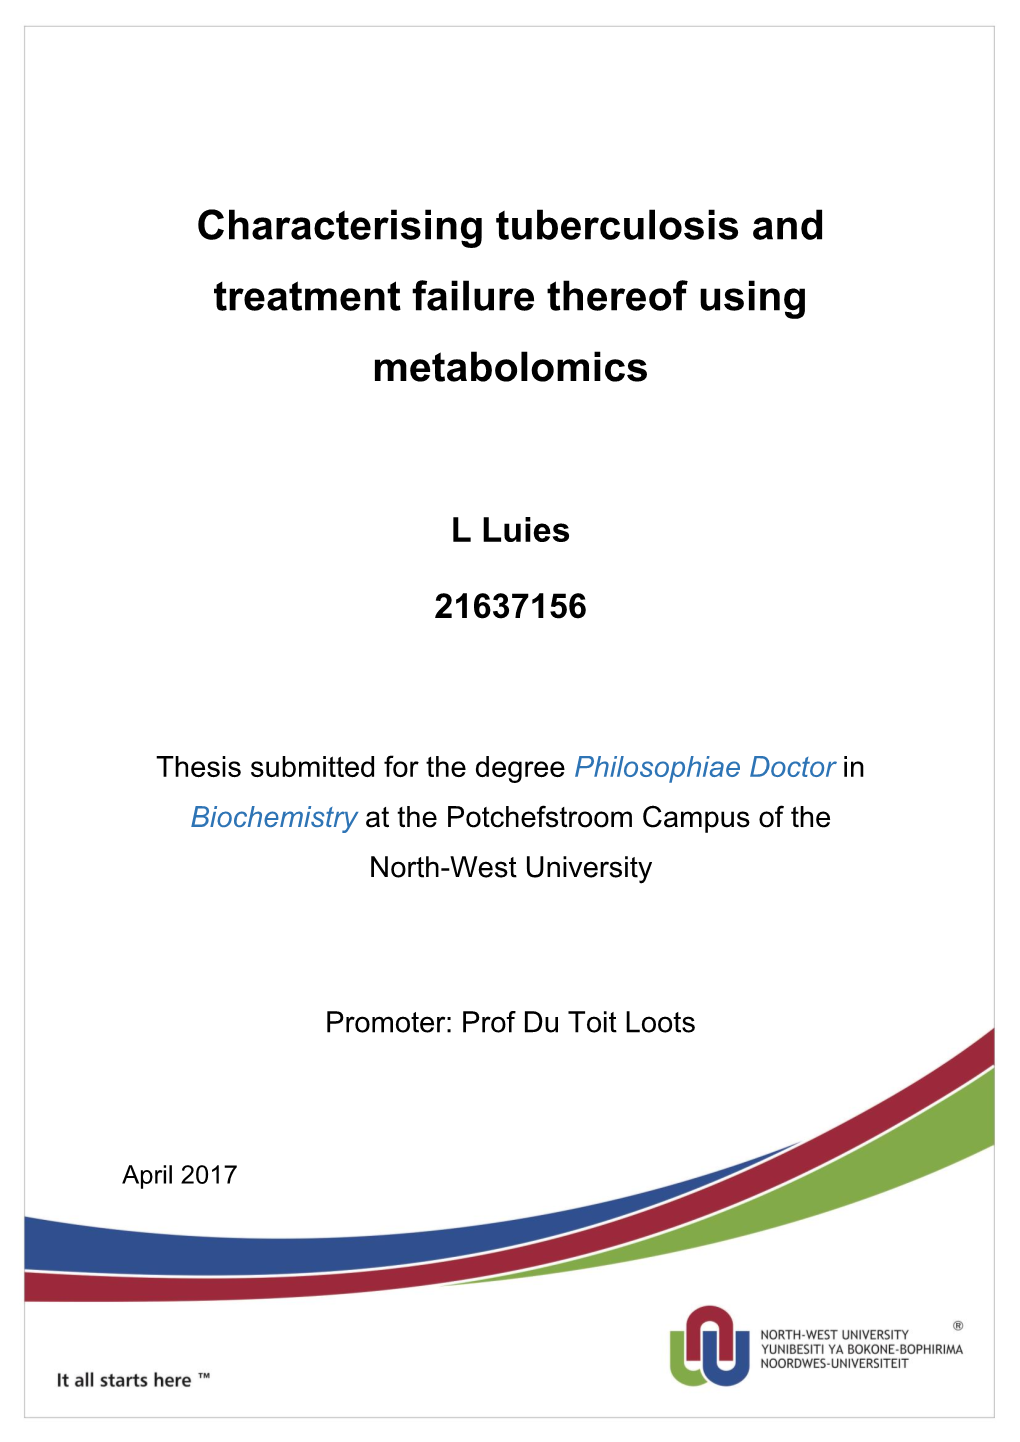 Characterising Tuberculosis and Treatment Failure Thereof Using Metabolomics